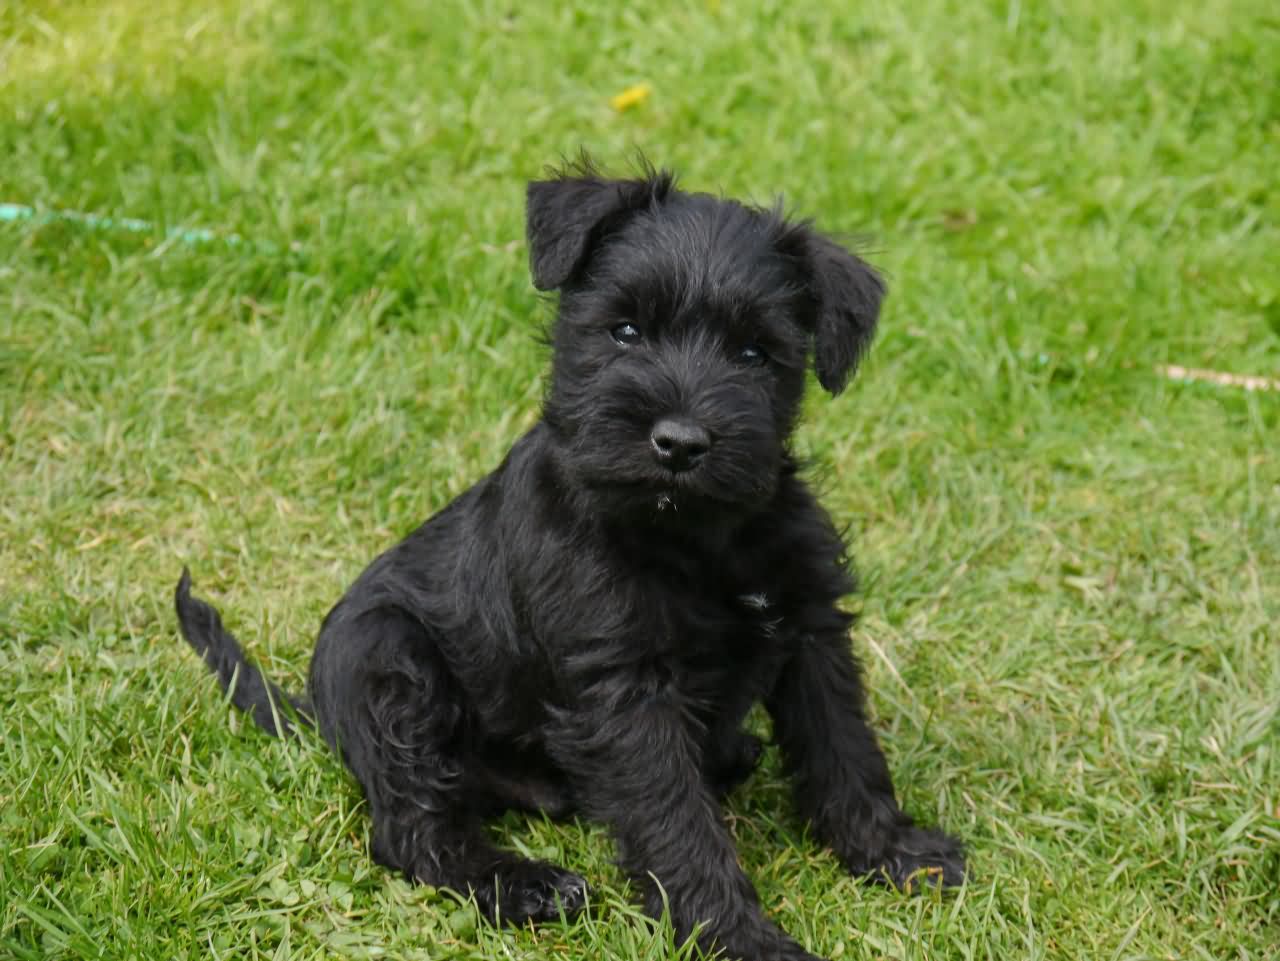 Miniature Black Giant Schnauzer Puppy Sitting On Grass